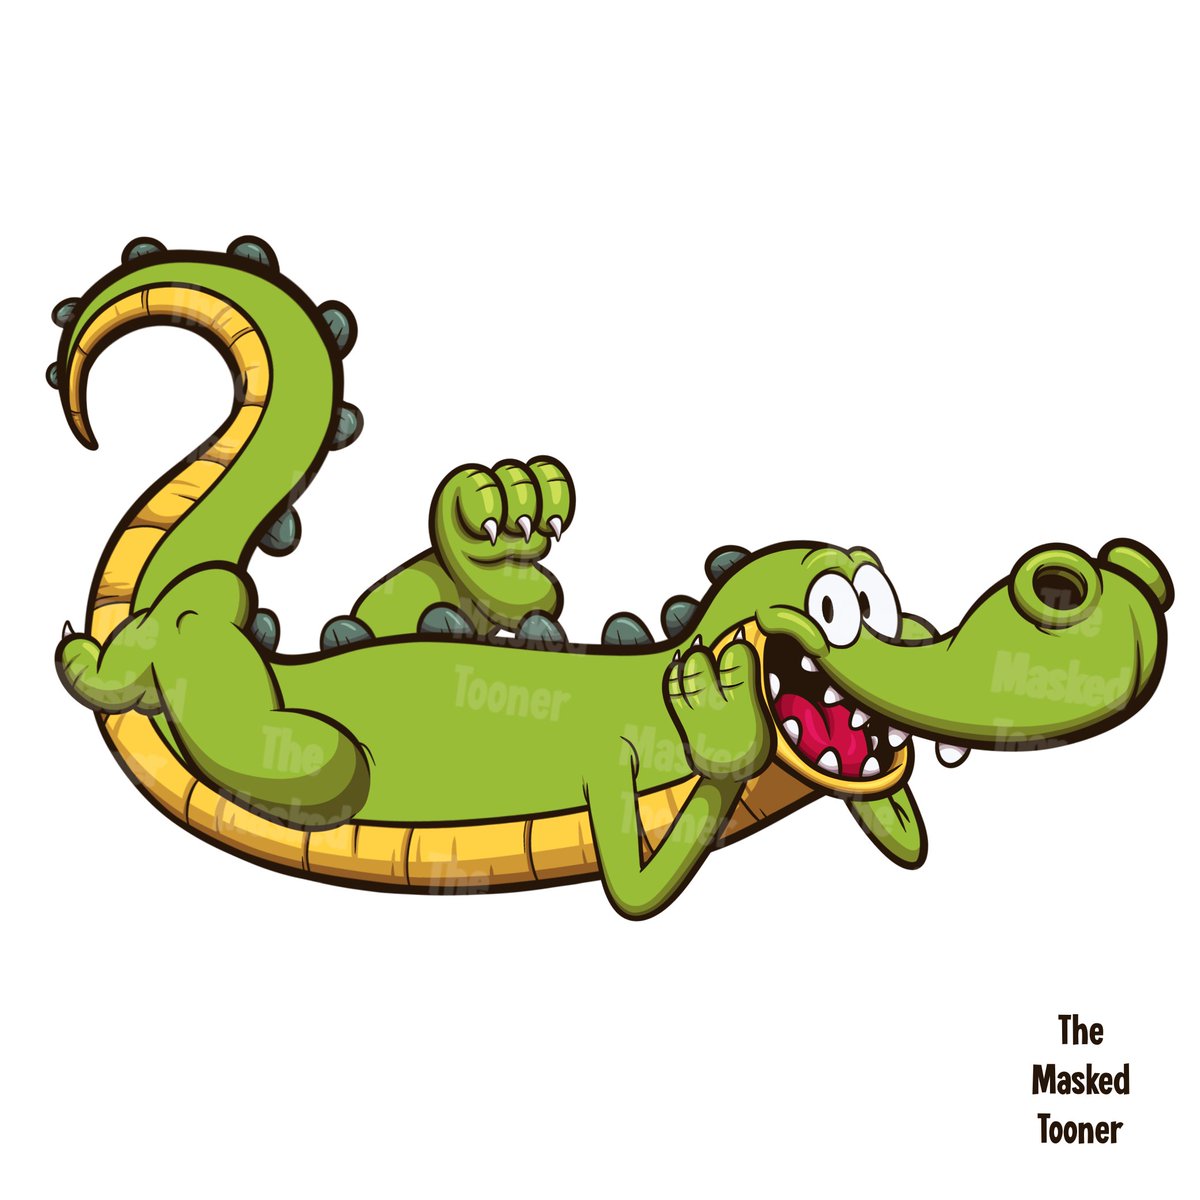 Cute crocodile character 🥺🐊
-
#crocodile #alligator #reptile #wildlife #nature #animal #safari #cartoon #themaskedtooner #vector #vectorart #stockphoto #illustration #tshirtdesign #cartoontshirt #dutchartist #characterdesign #graphicdesign #cartoonphoto #photocartoon